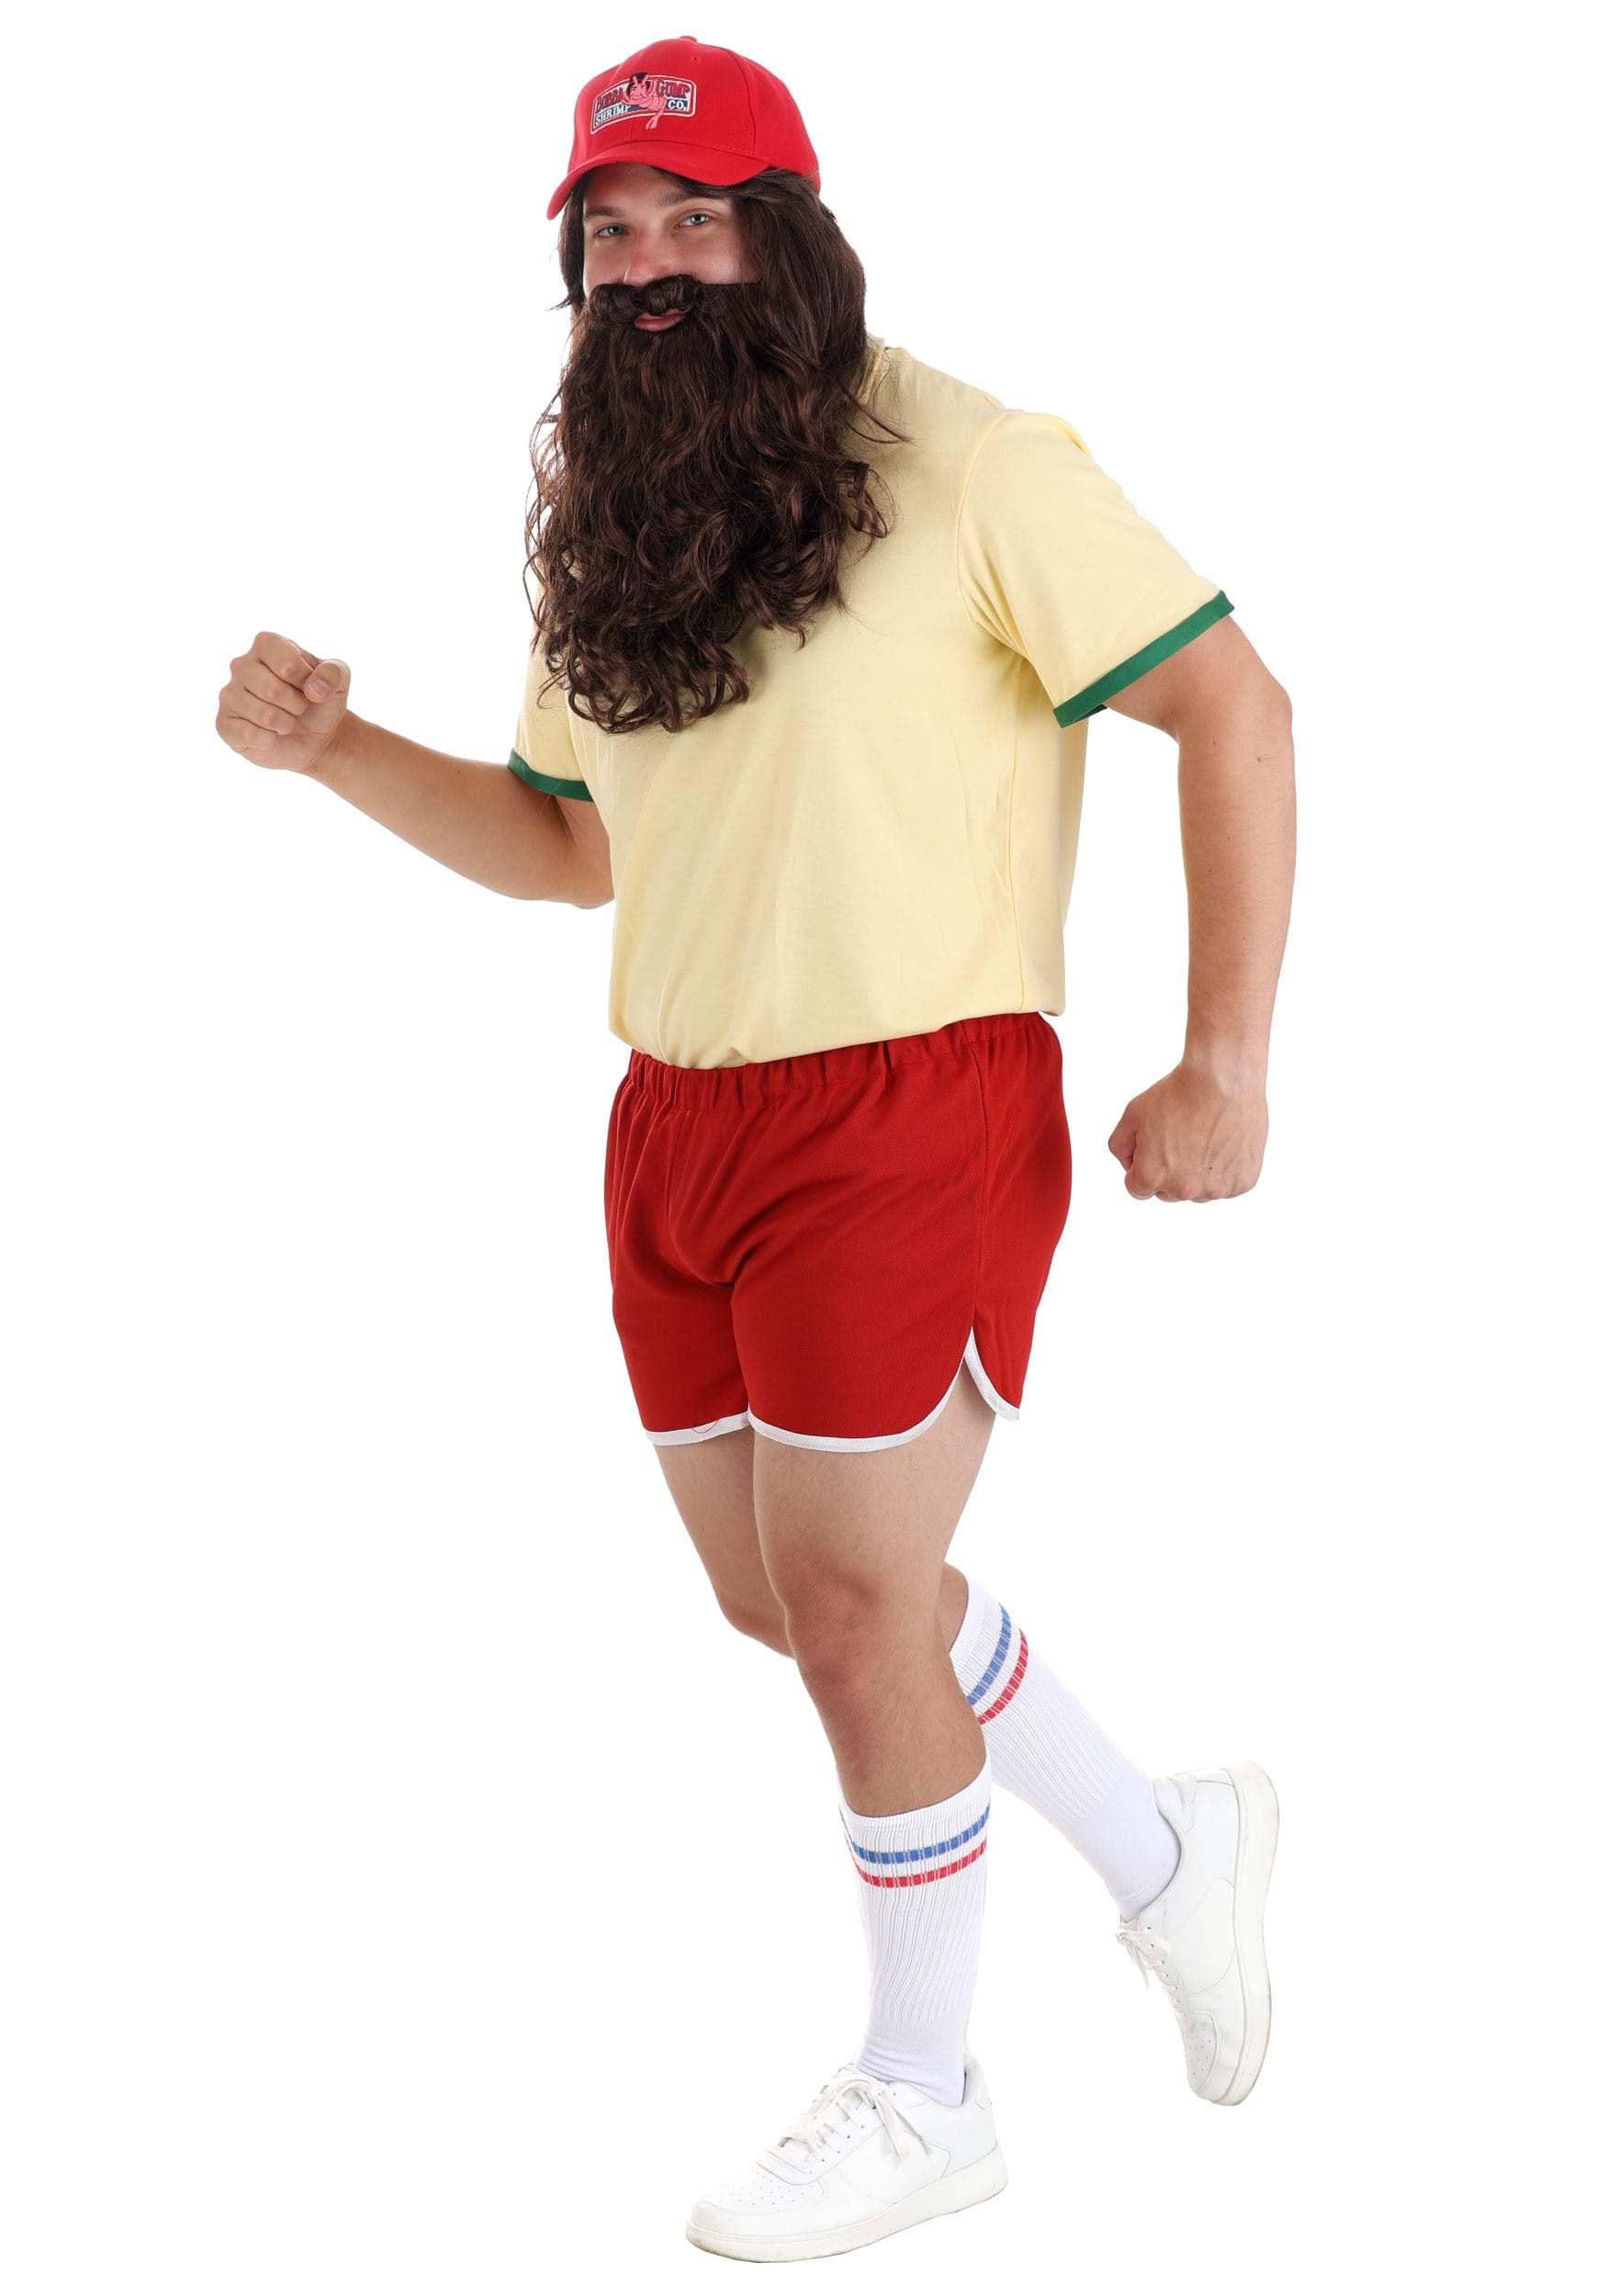 Forrest Gump Running Costume